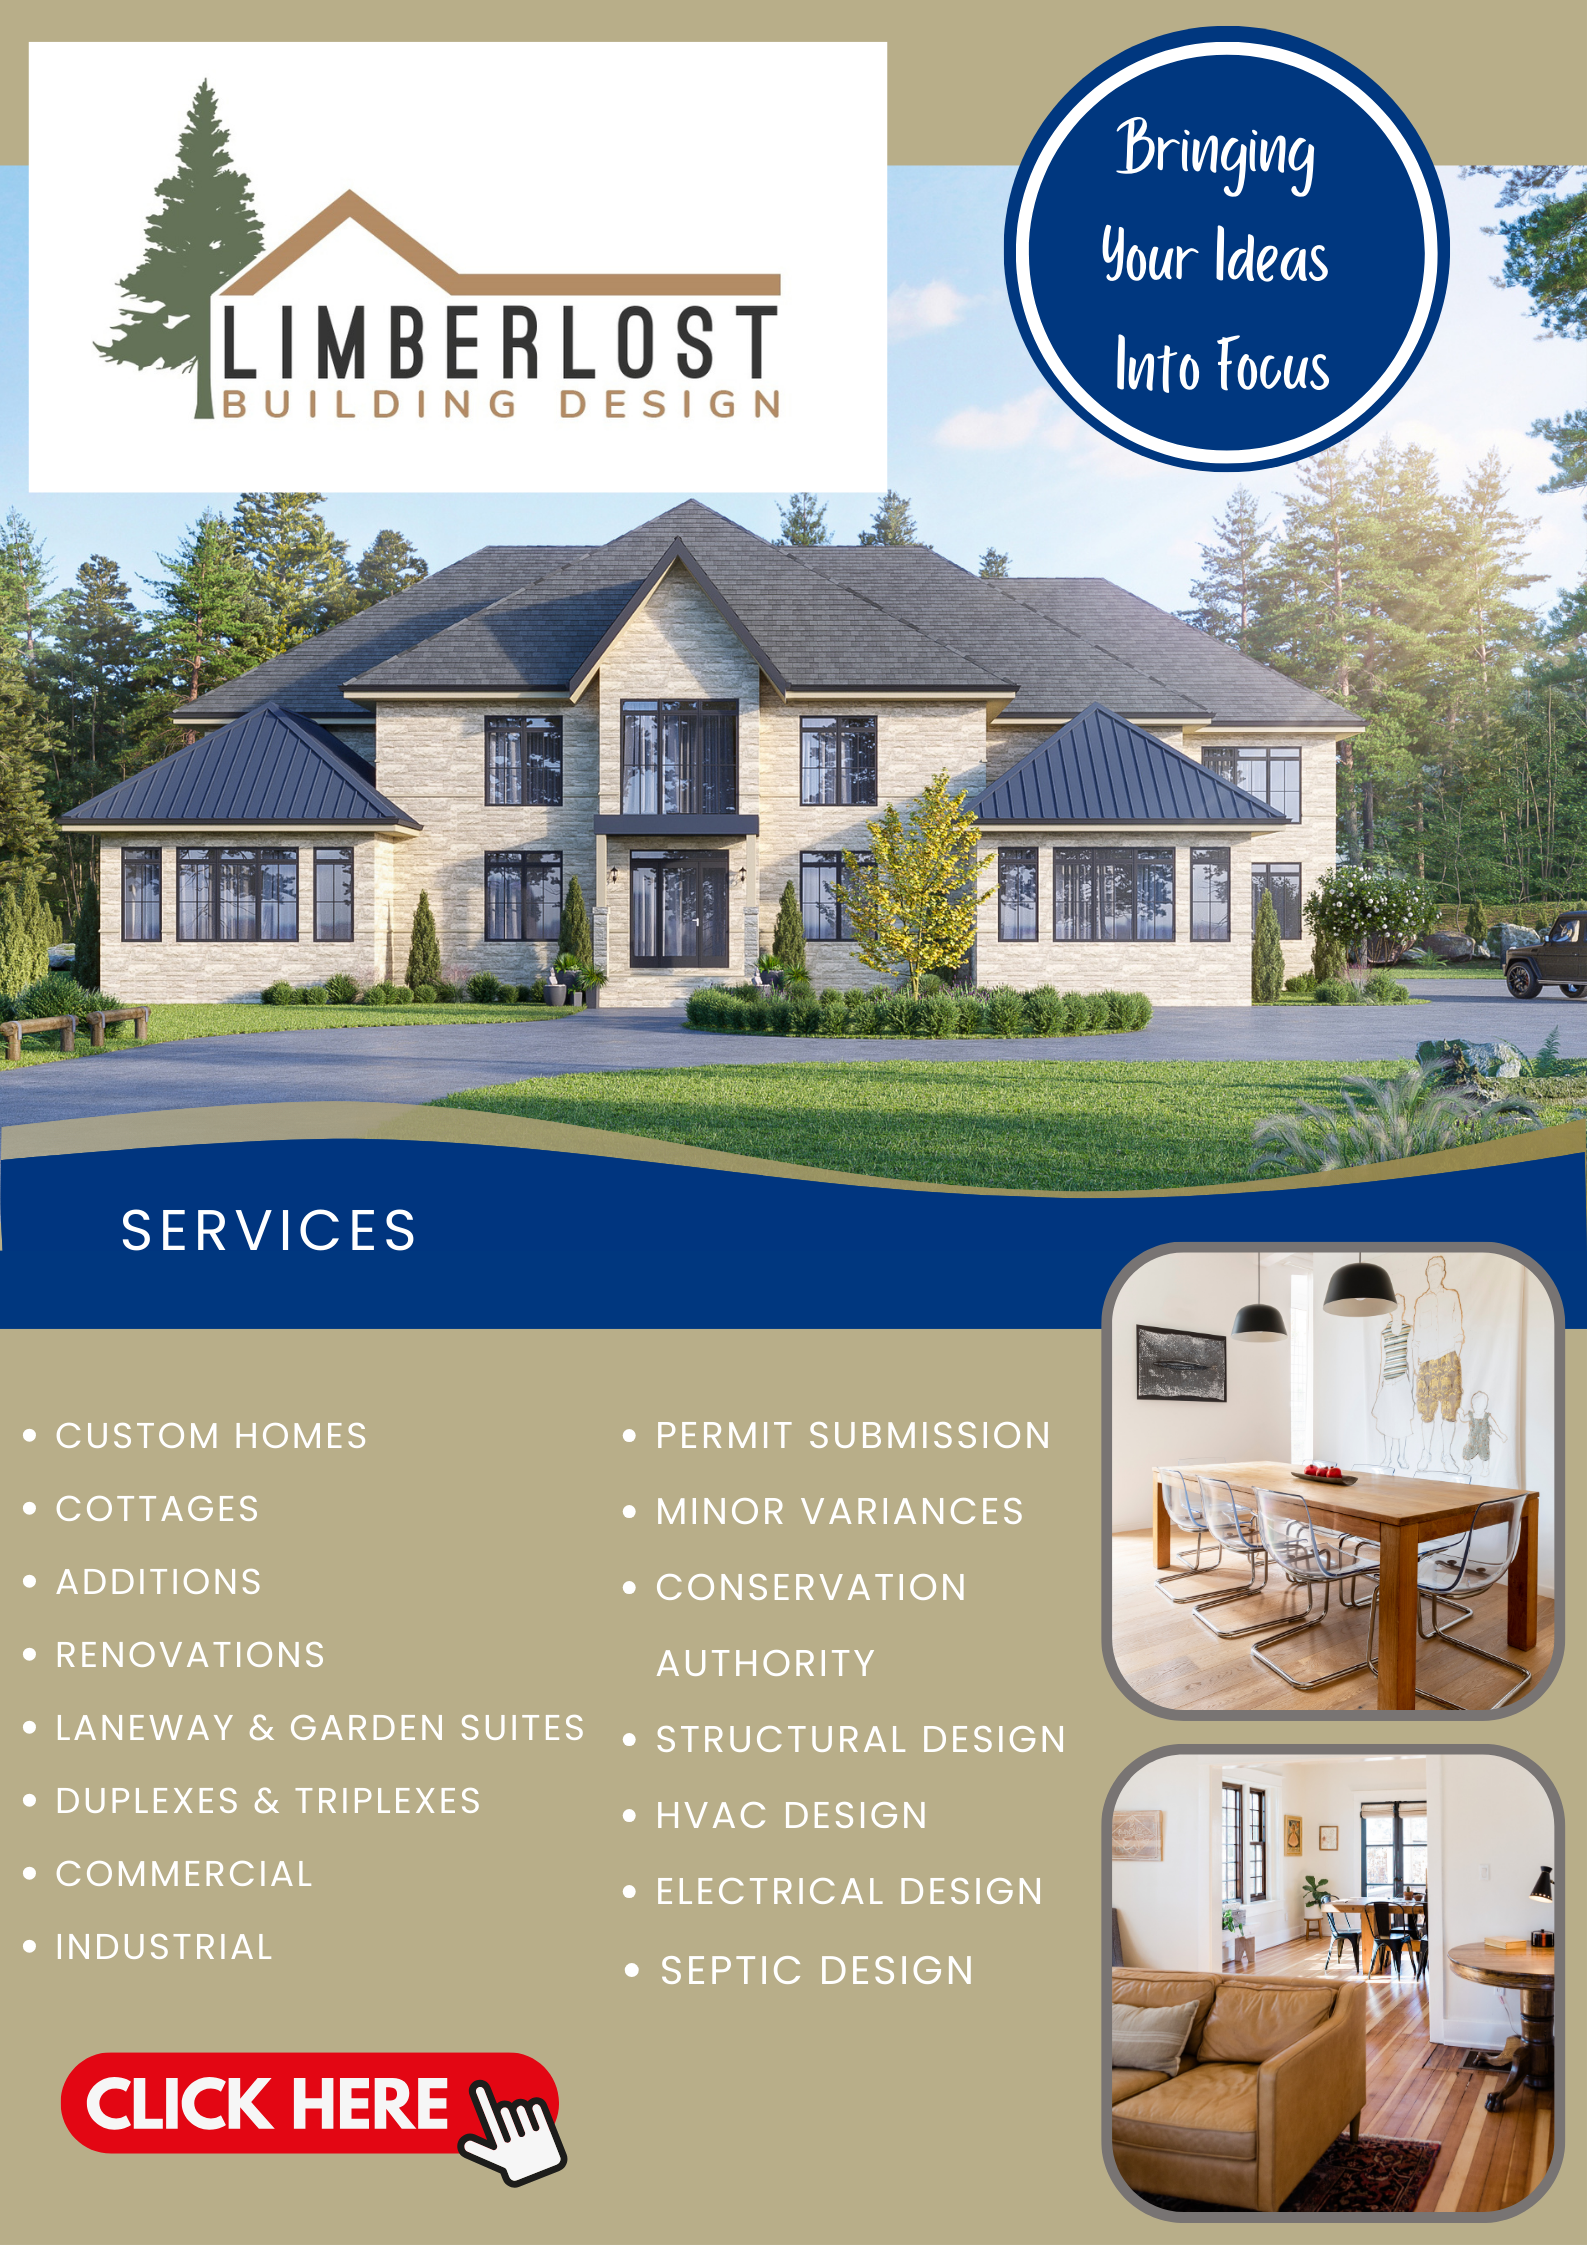 Limberlost Building Design